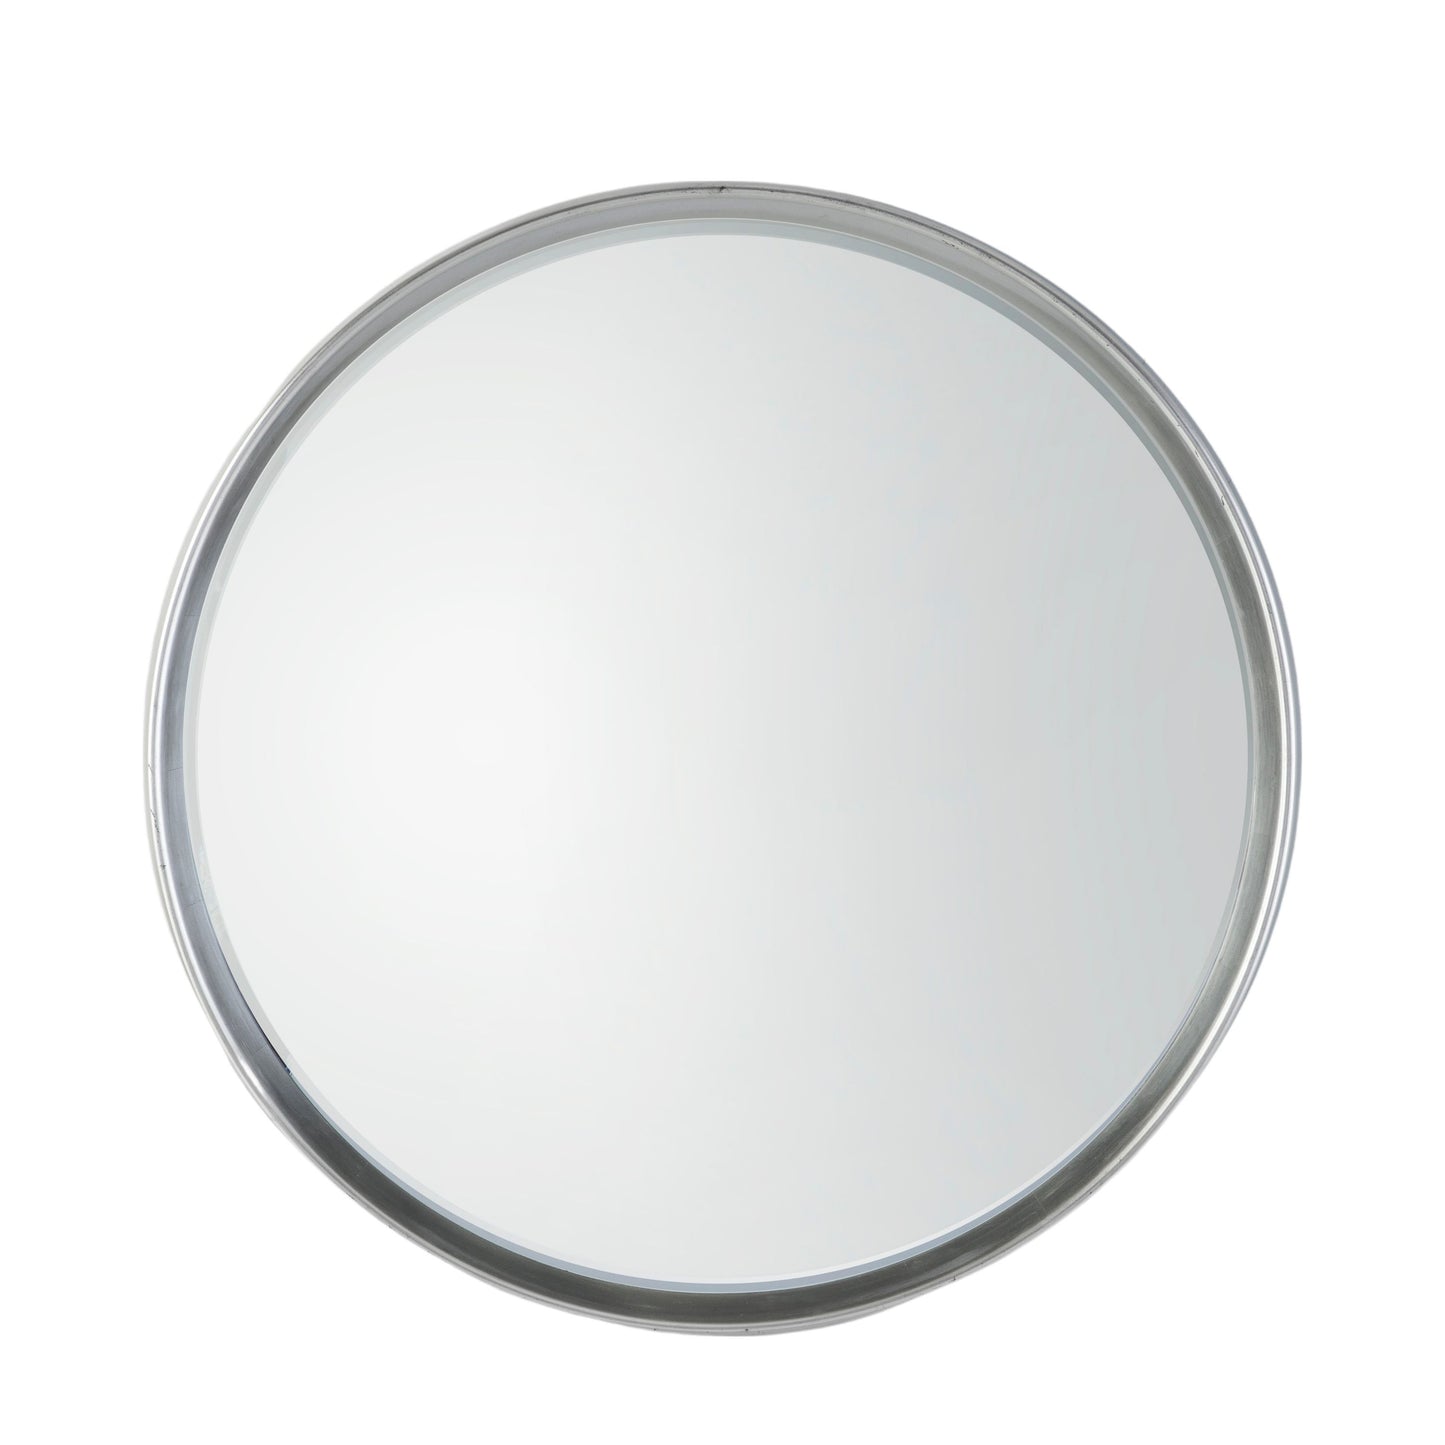 Gallery Interiors Harvey Round Mirror in Silver